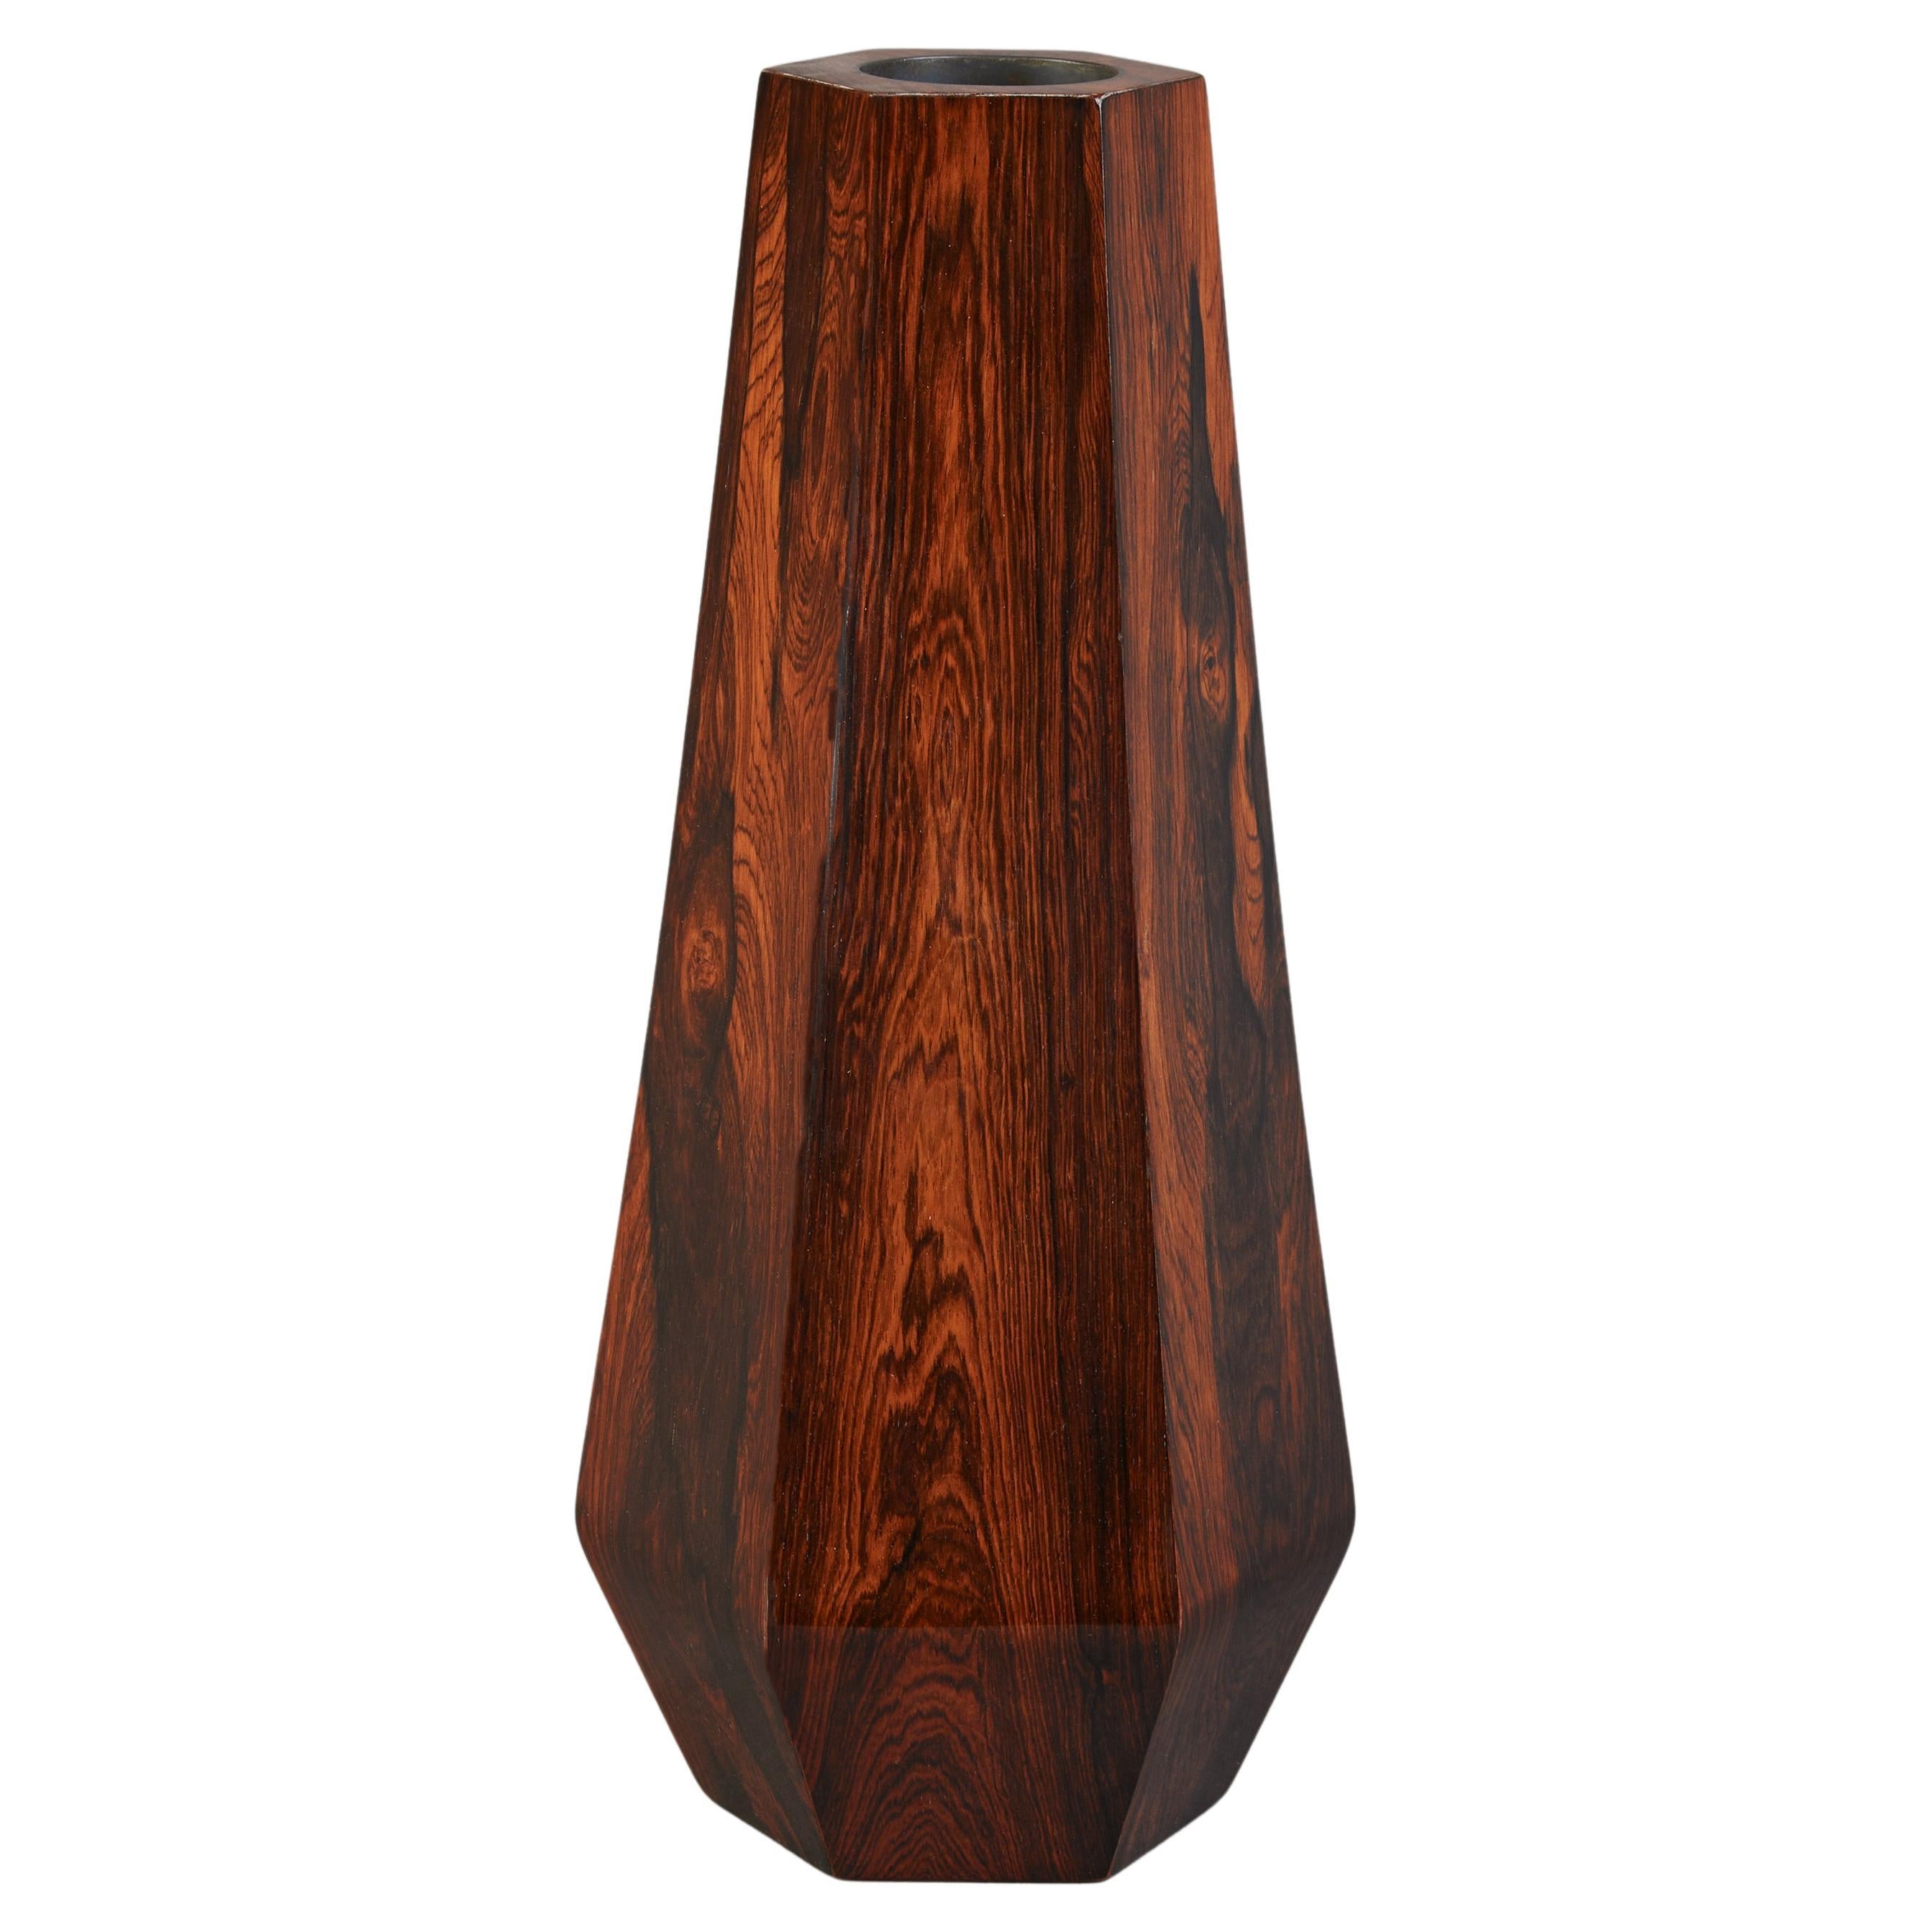 Hexagonal Tall Vessel in Beautifully Grained Veneered Wood For Sale